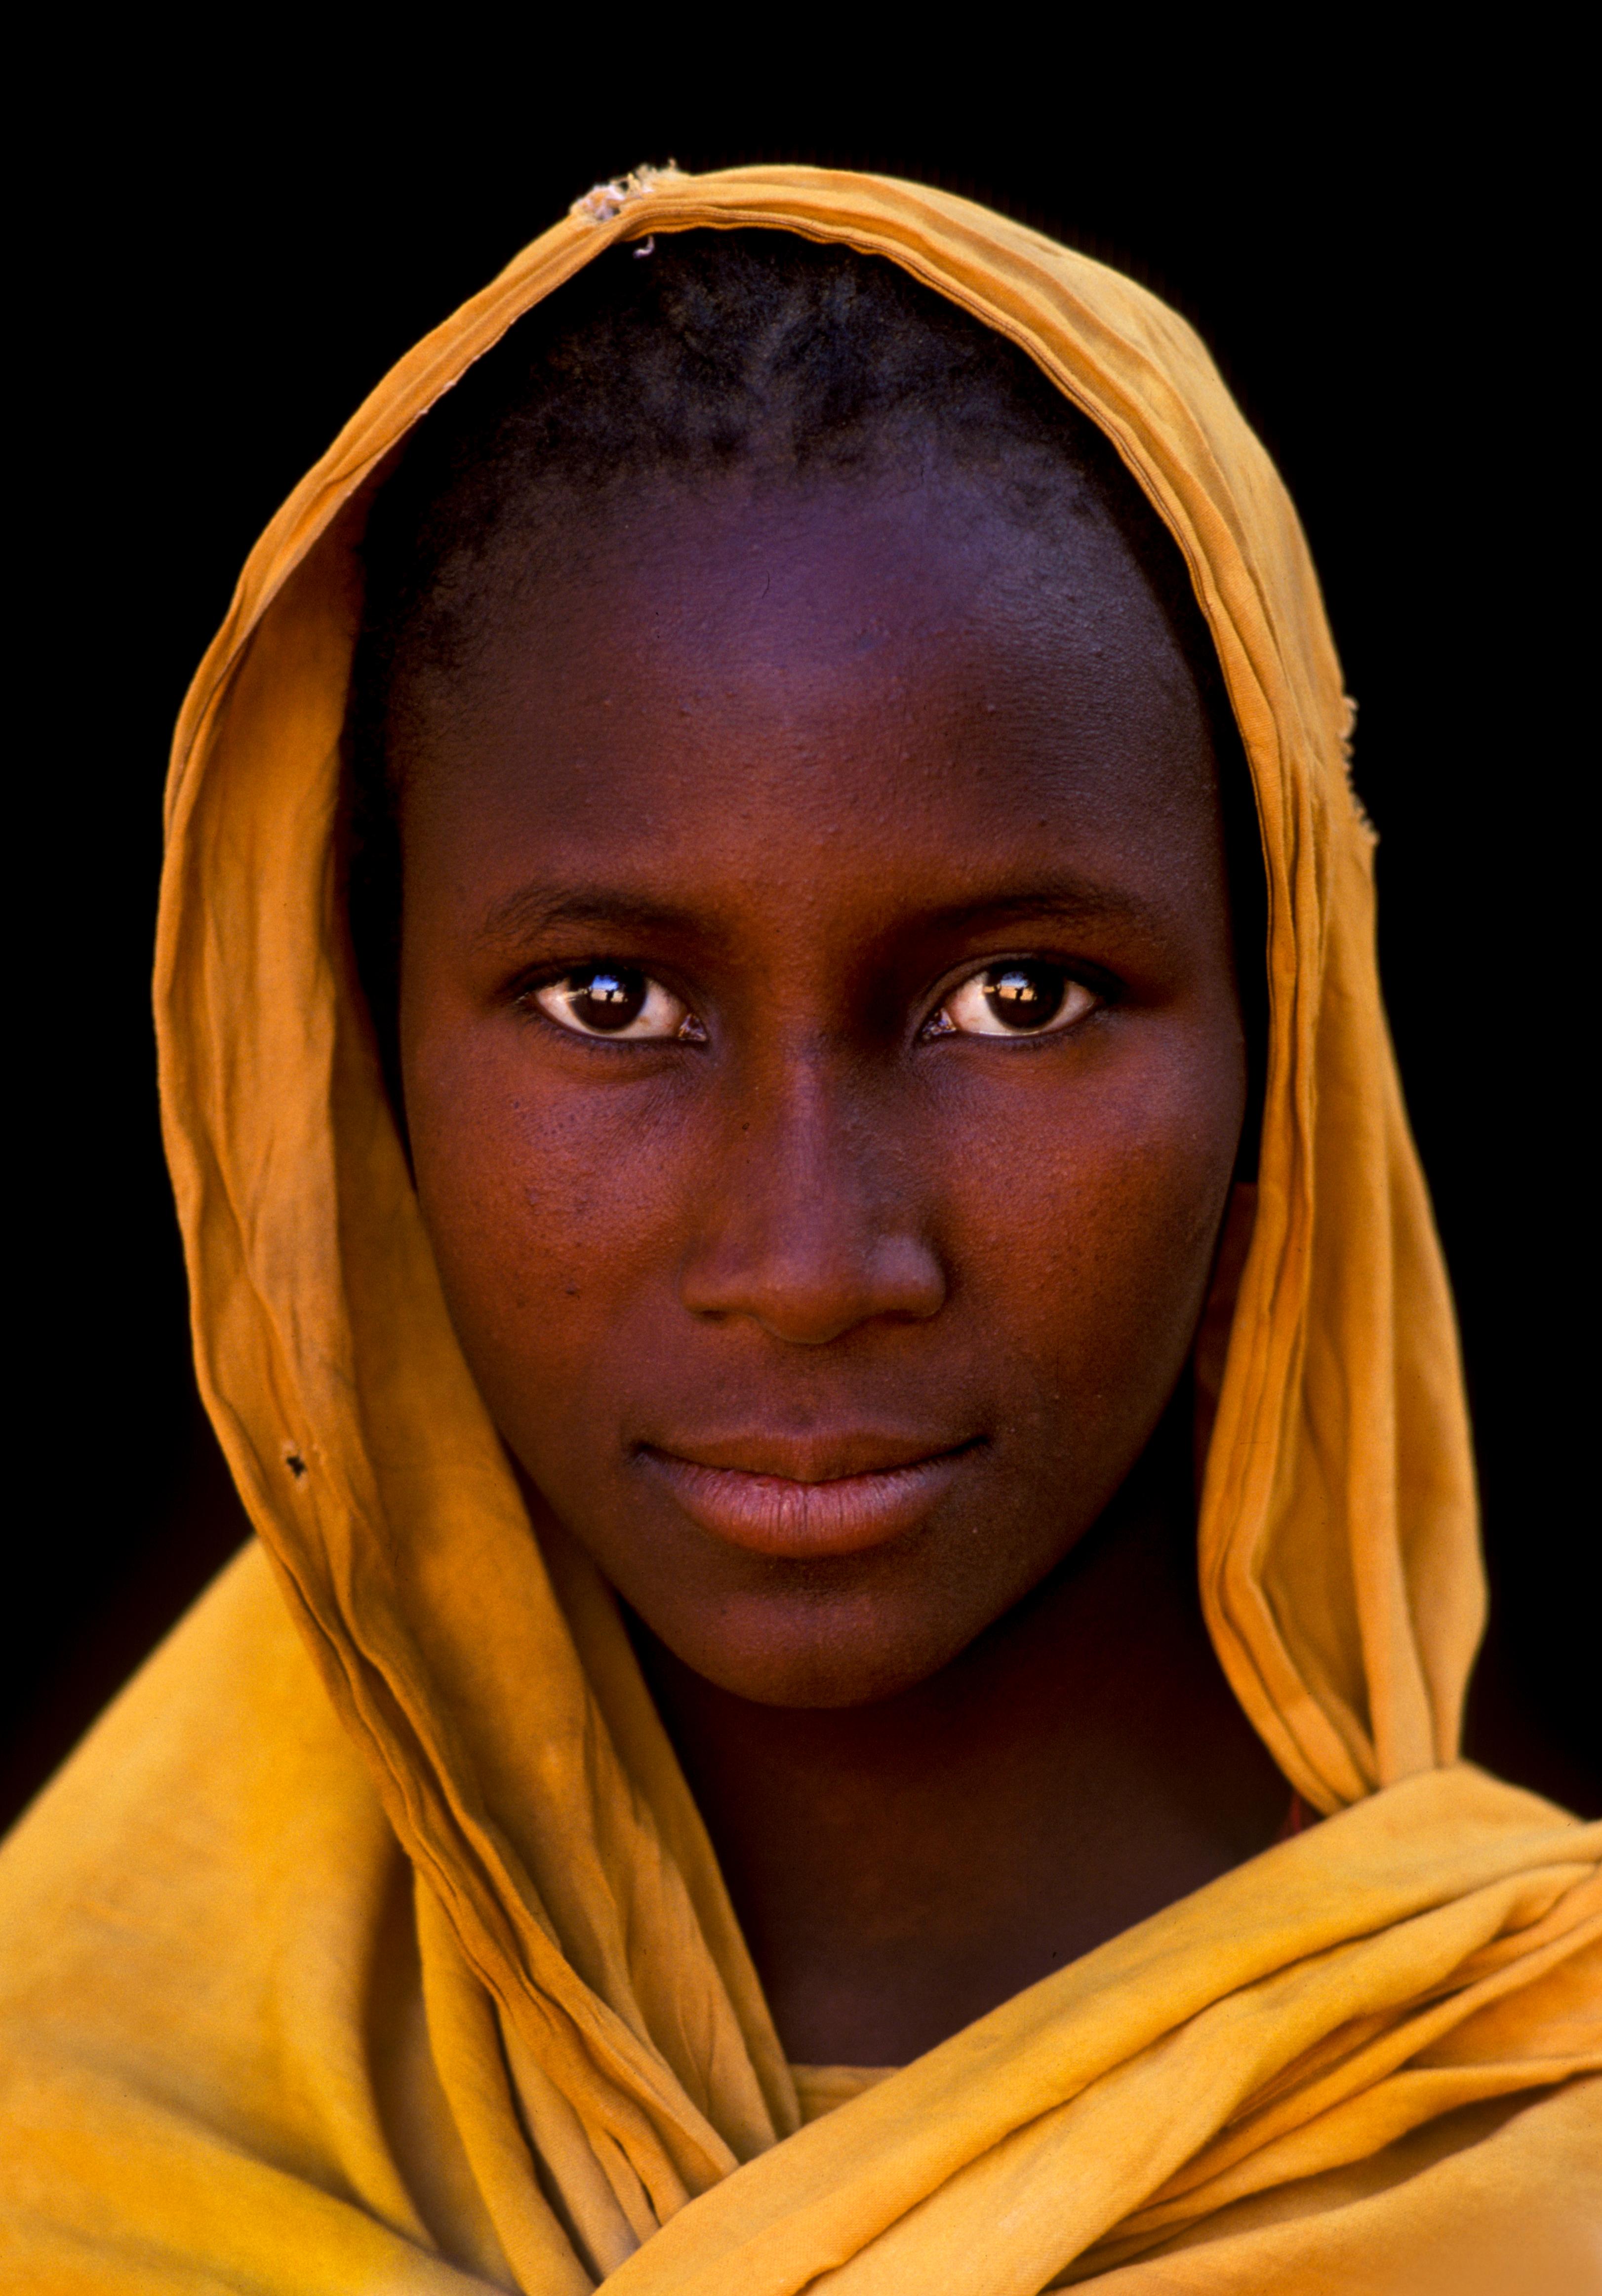 Mauritanie - Jeune fille Maure. Adrar